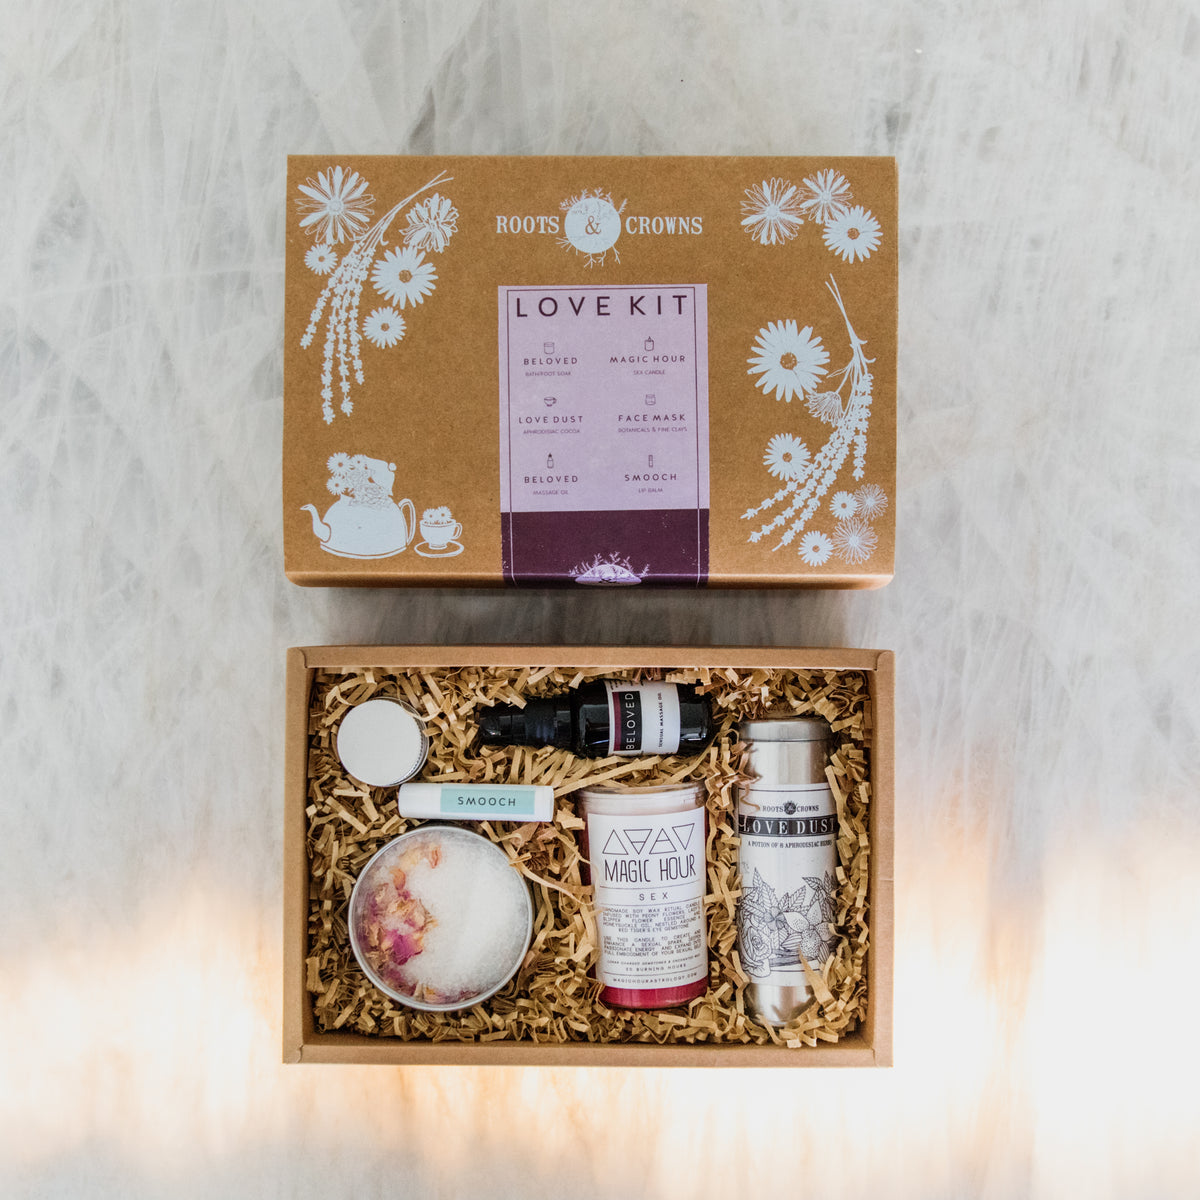 The Magic of Tarot Premium Box** Aromatherapy and rituals Gift Box